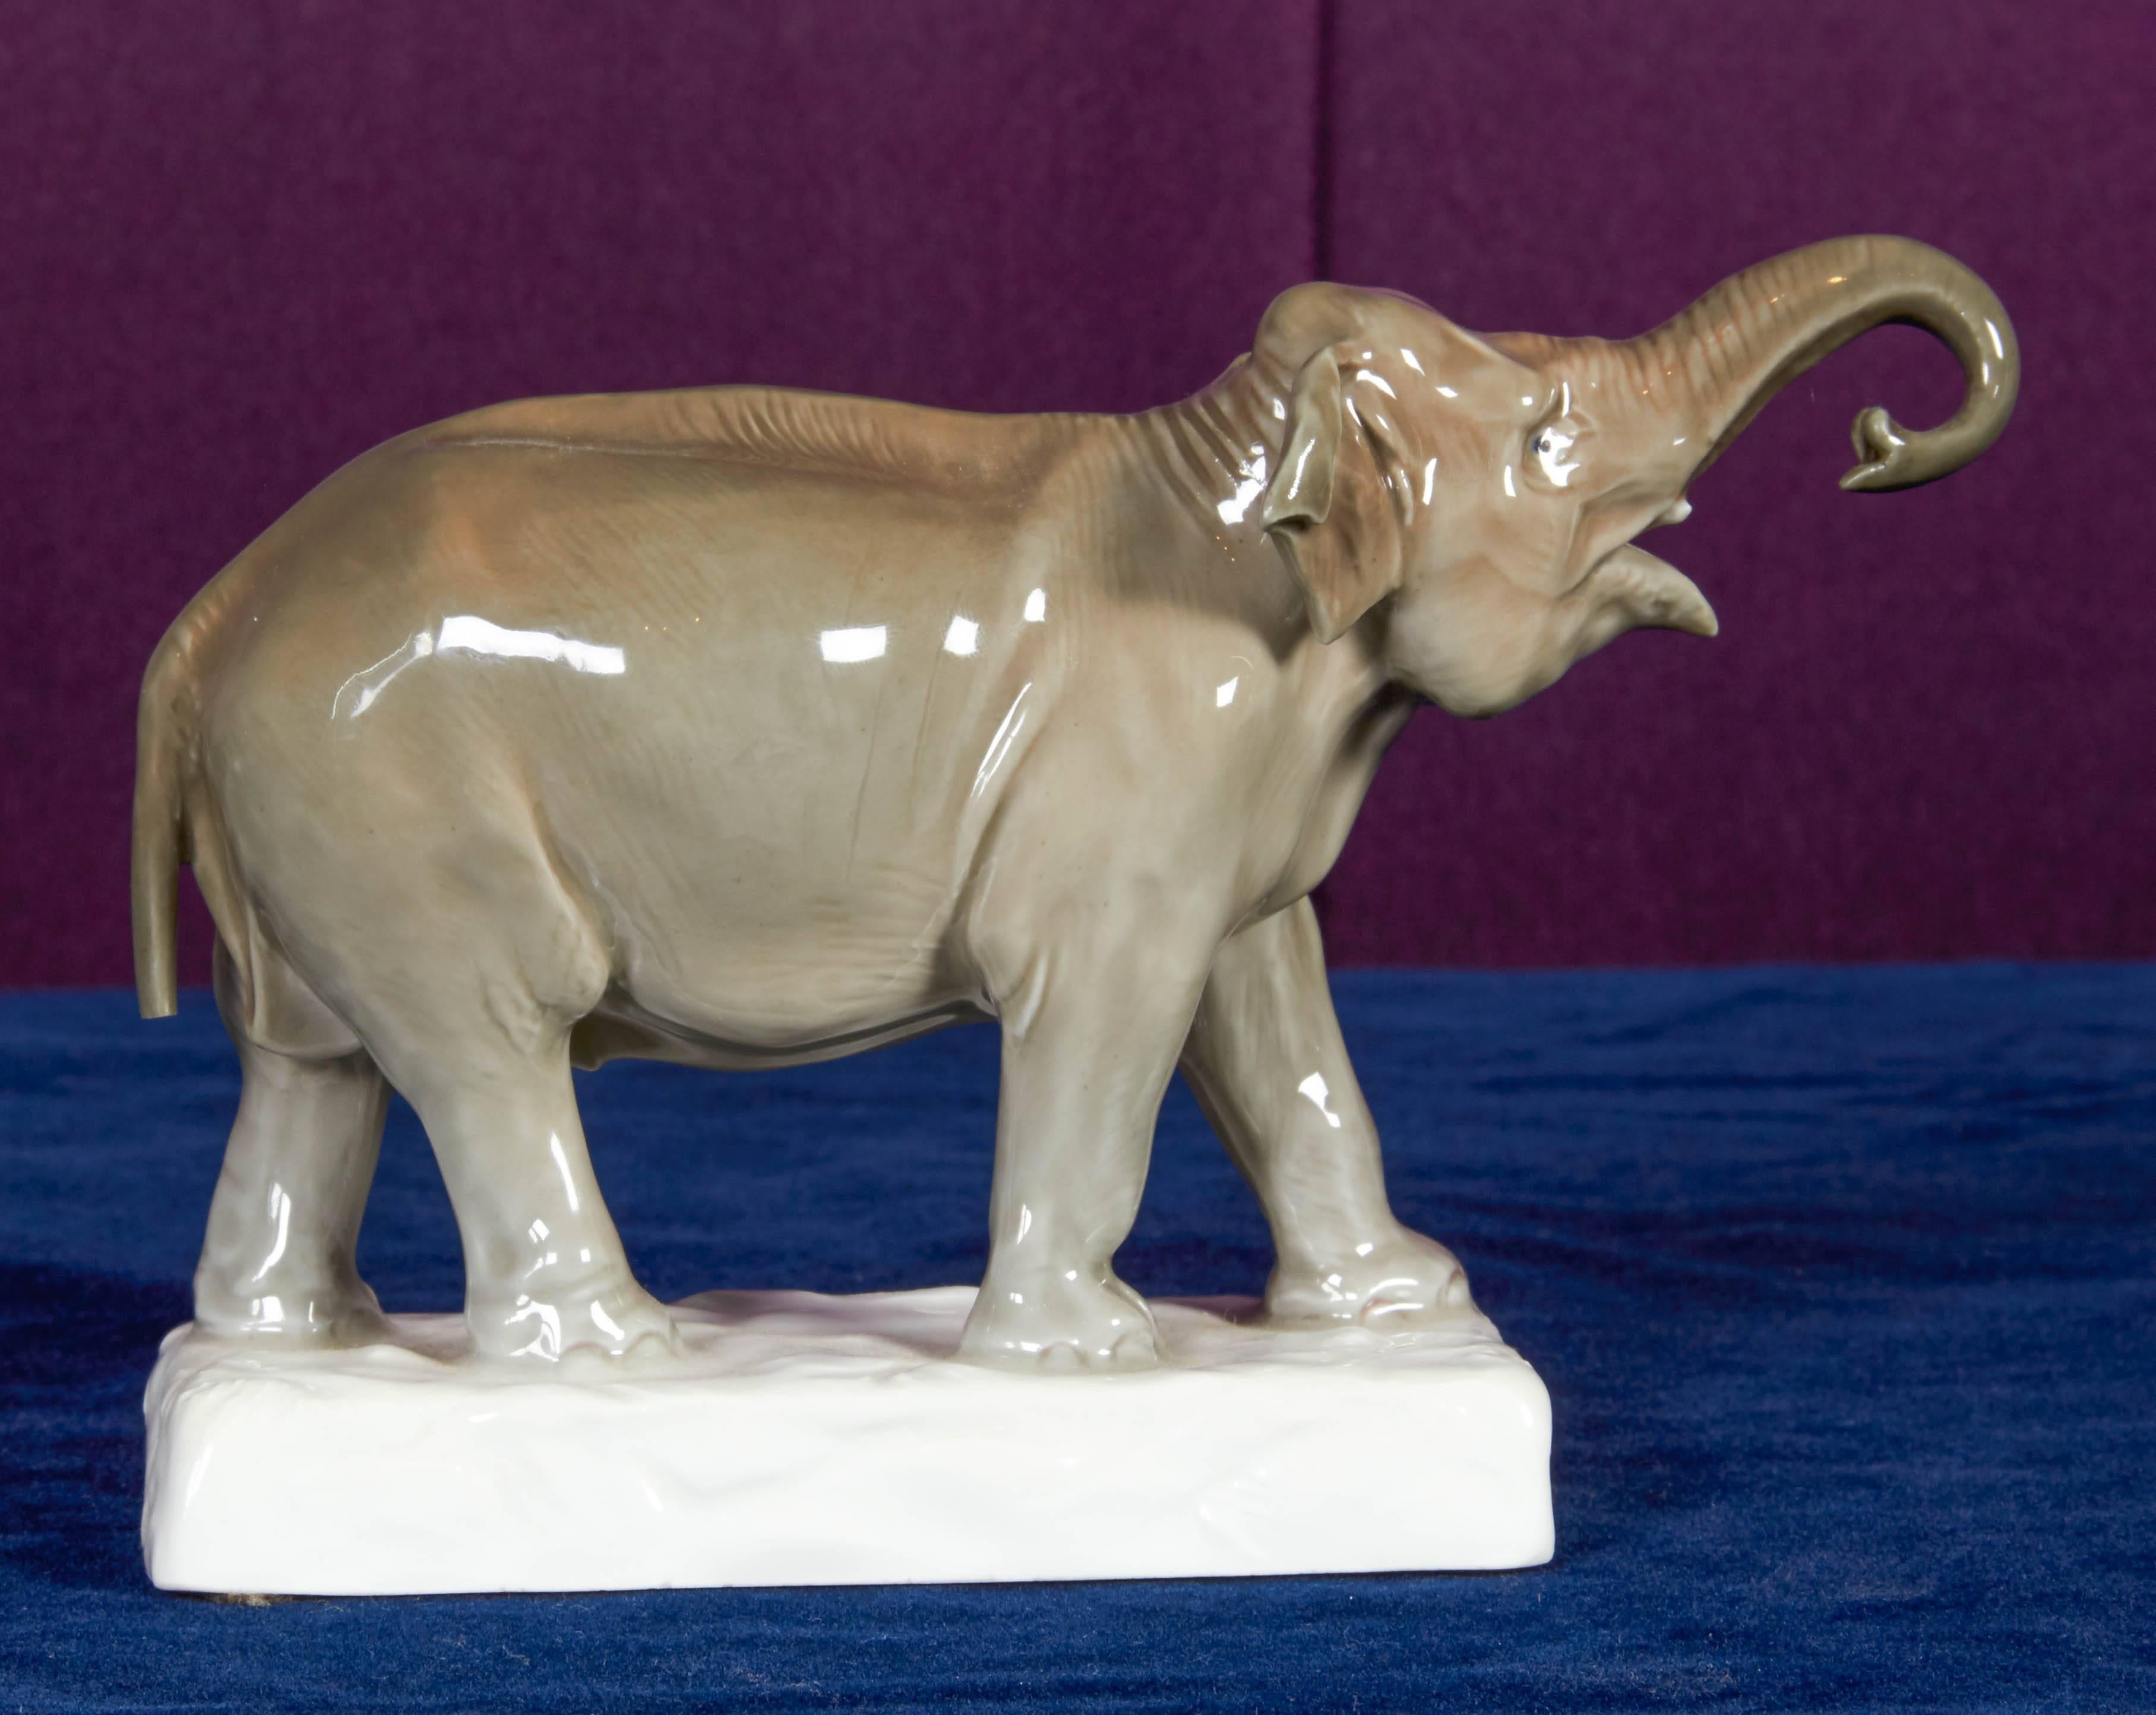 Meissener Porzellanfigur eines Elefanten (Art nouveau)